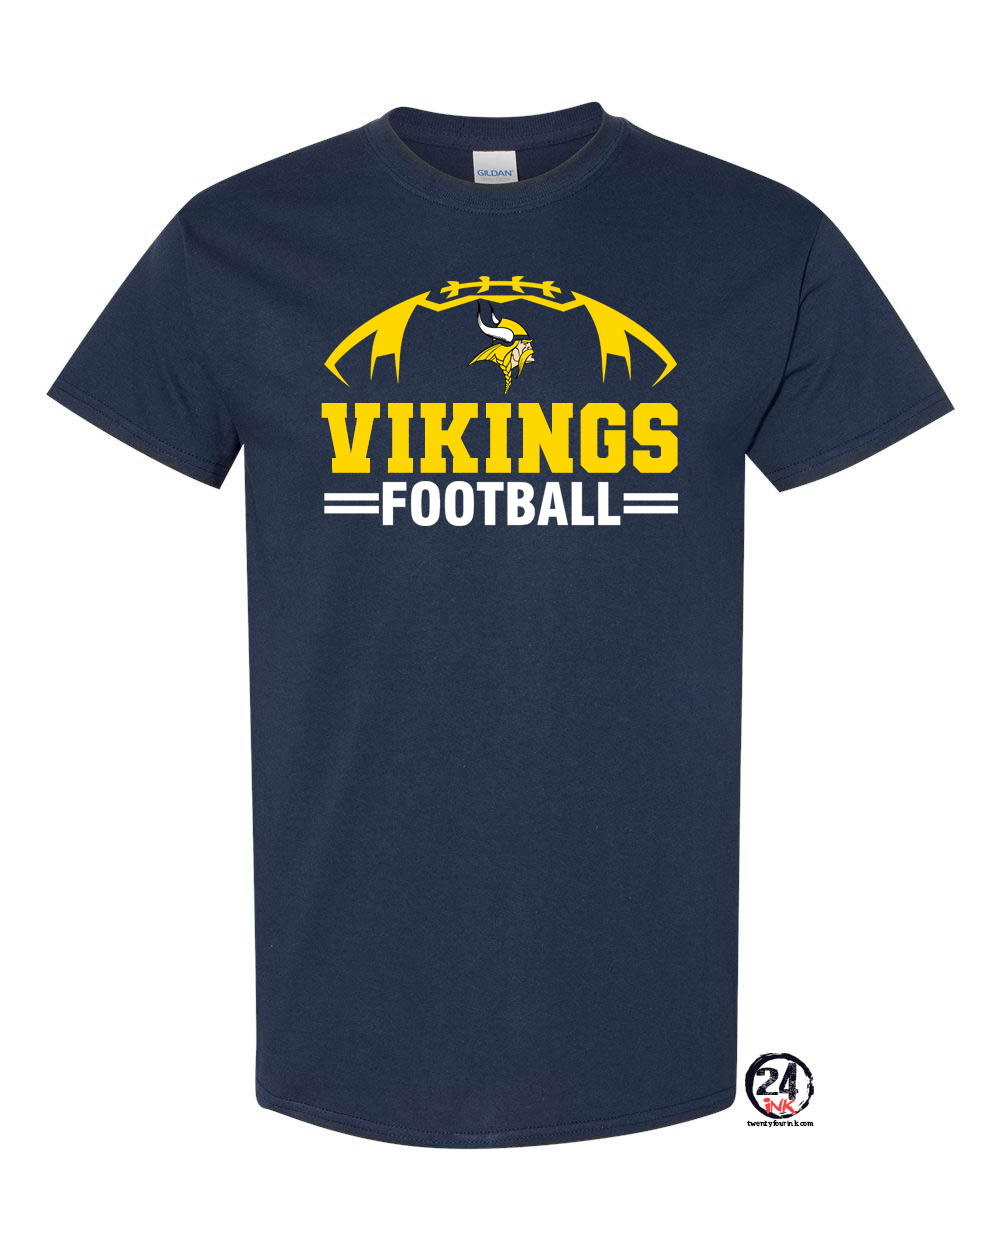 Vernon Football Design 2 T-Shirt